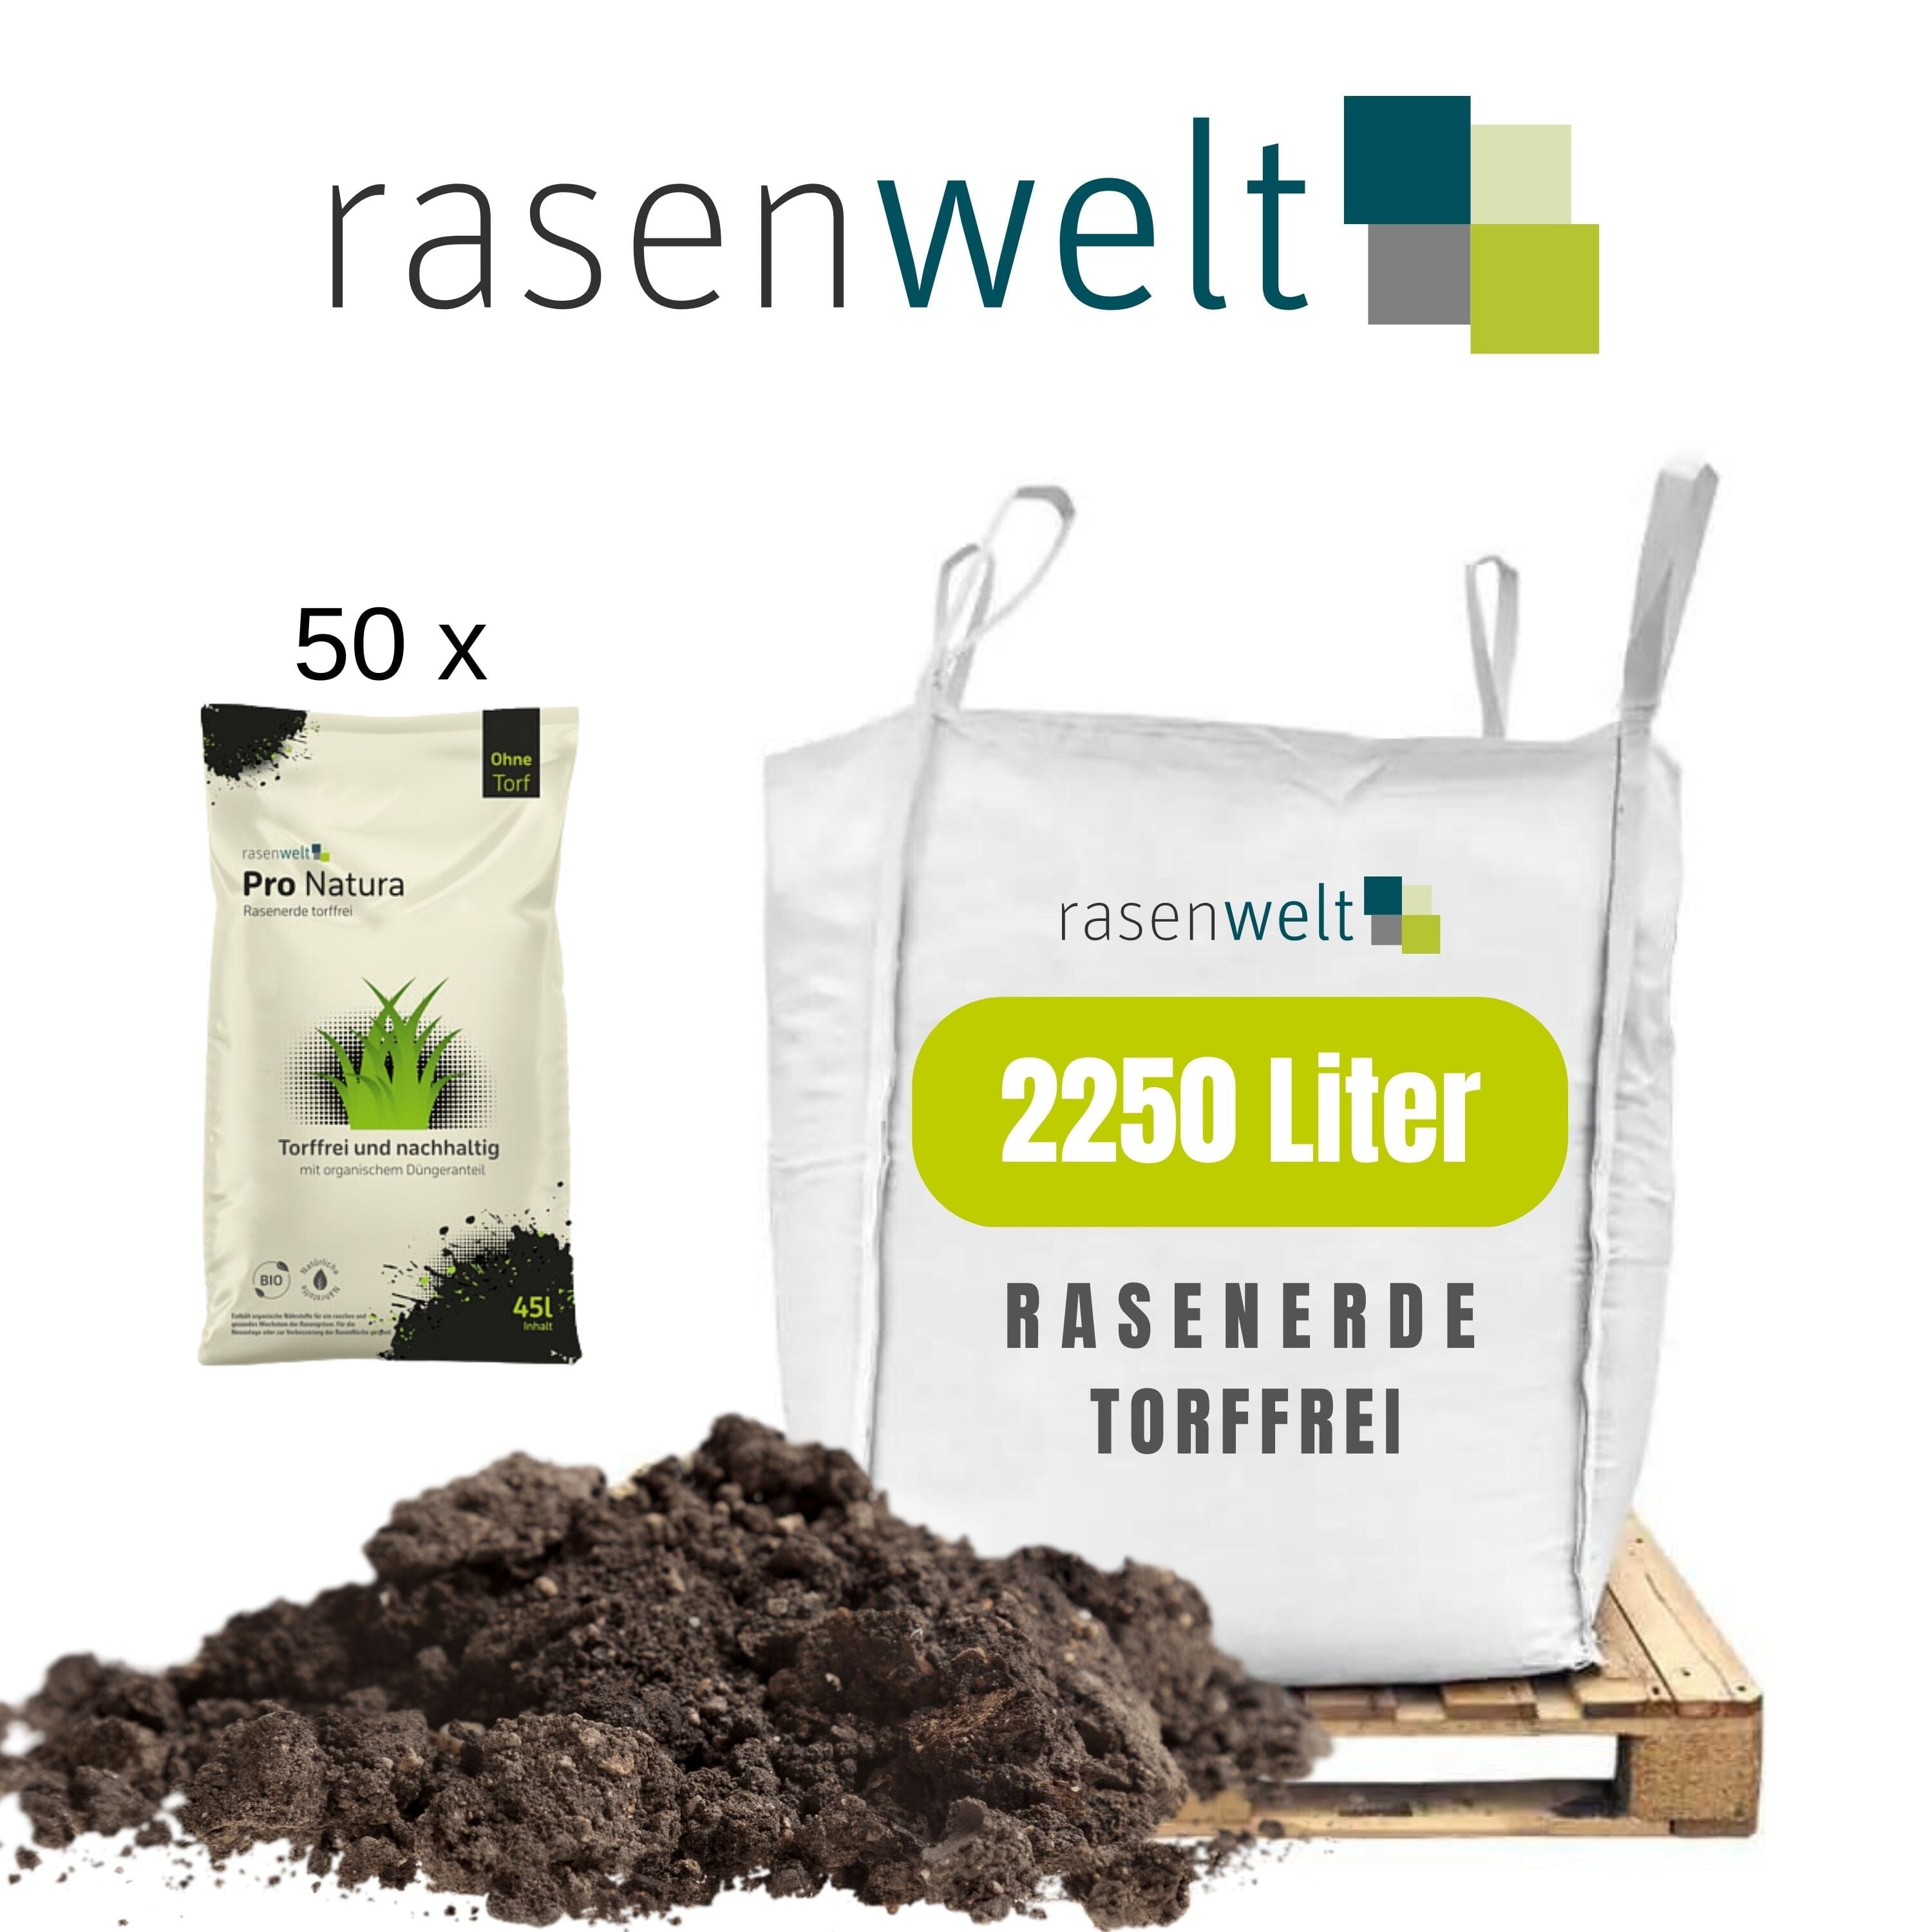 Rasenwelt Rasenerde torffrei - 2250 Liter | 50 x 45 L auf Palette ARENA